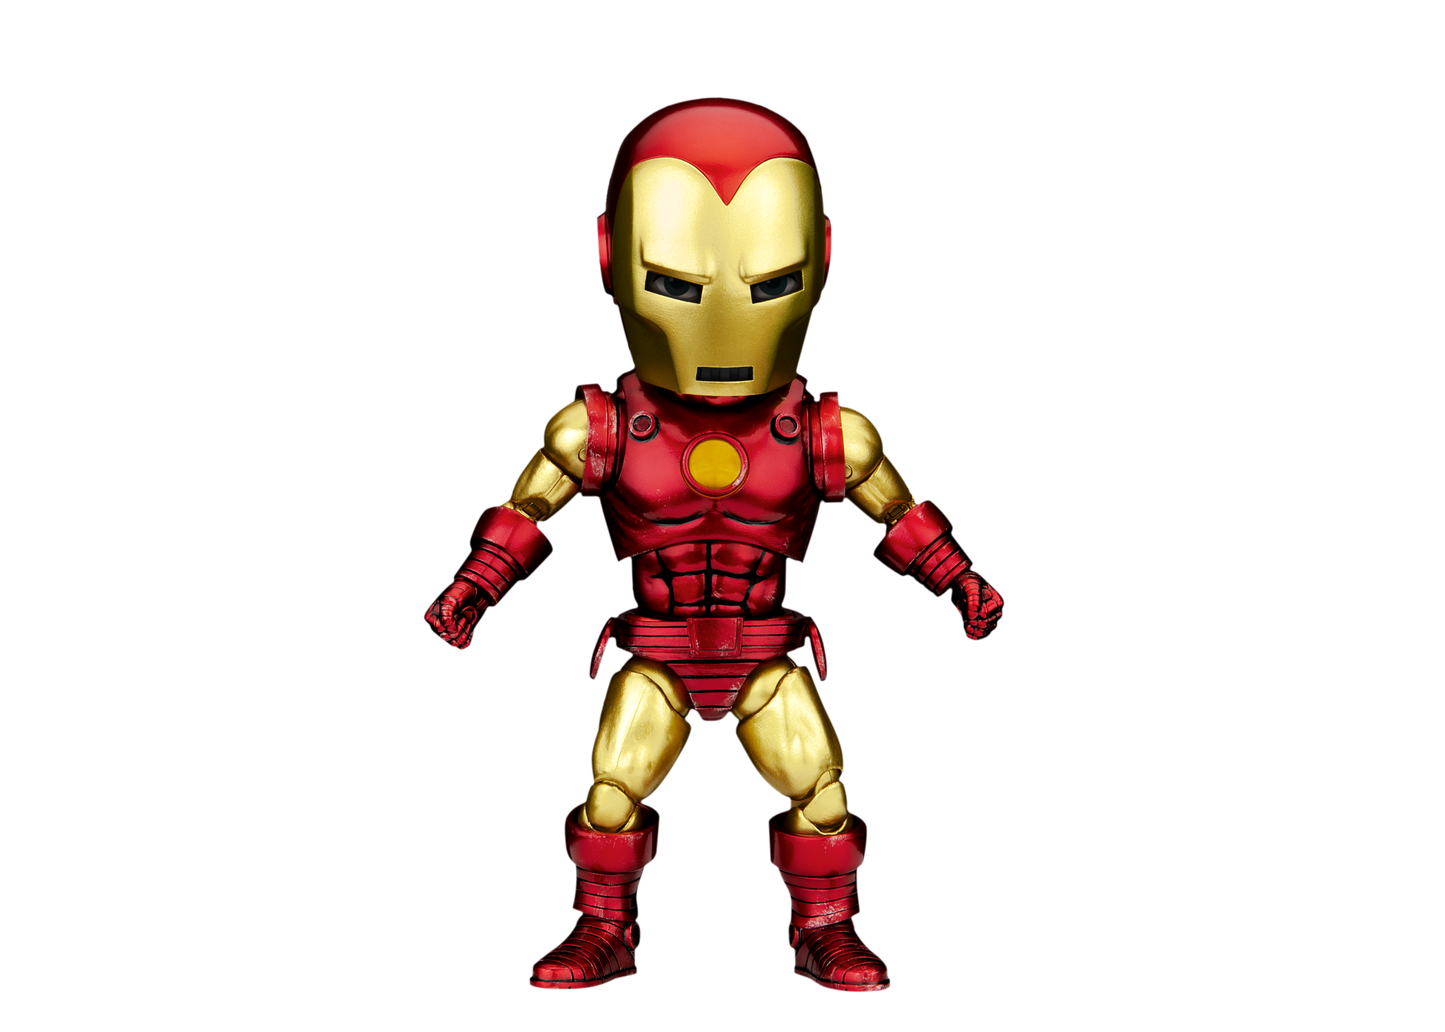 Marvel Comics Iron Man Classic Version (Egg Attack Action) EAA-105